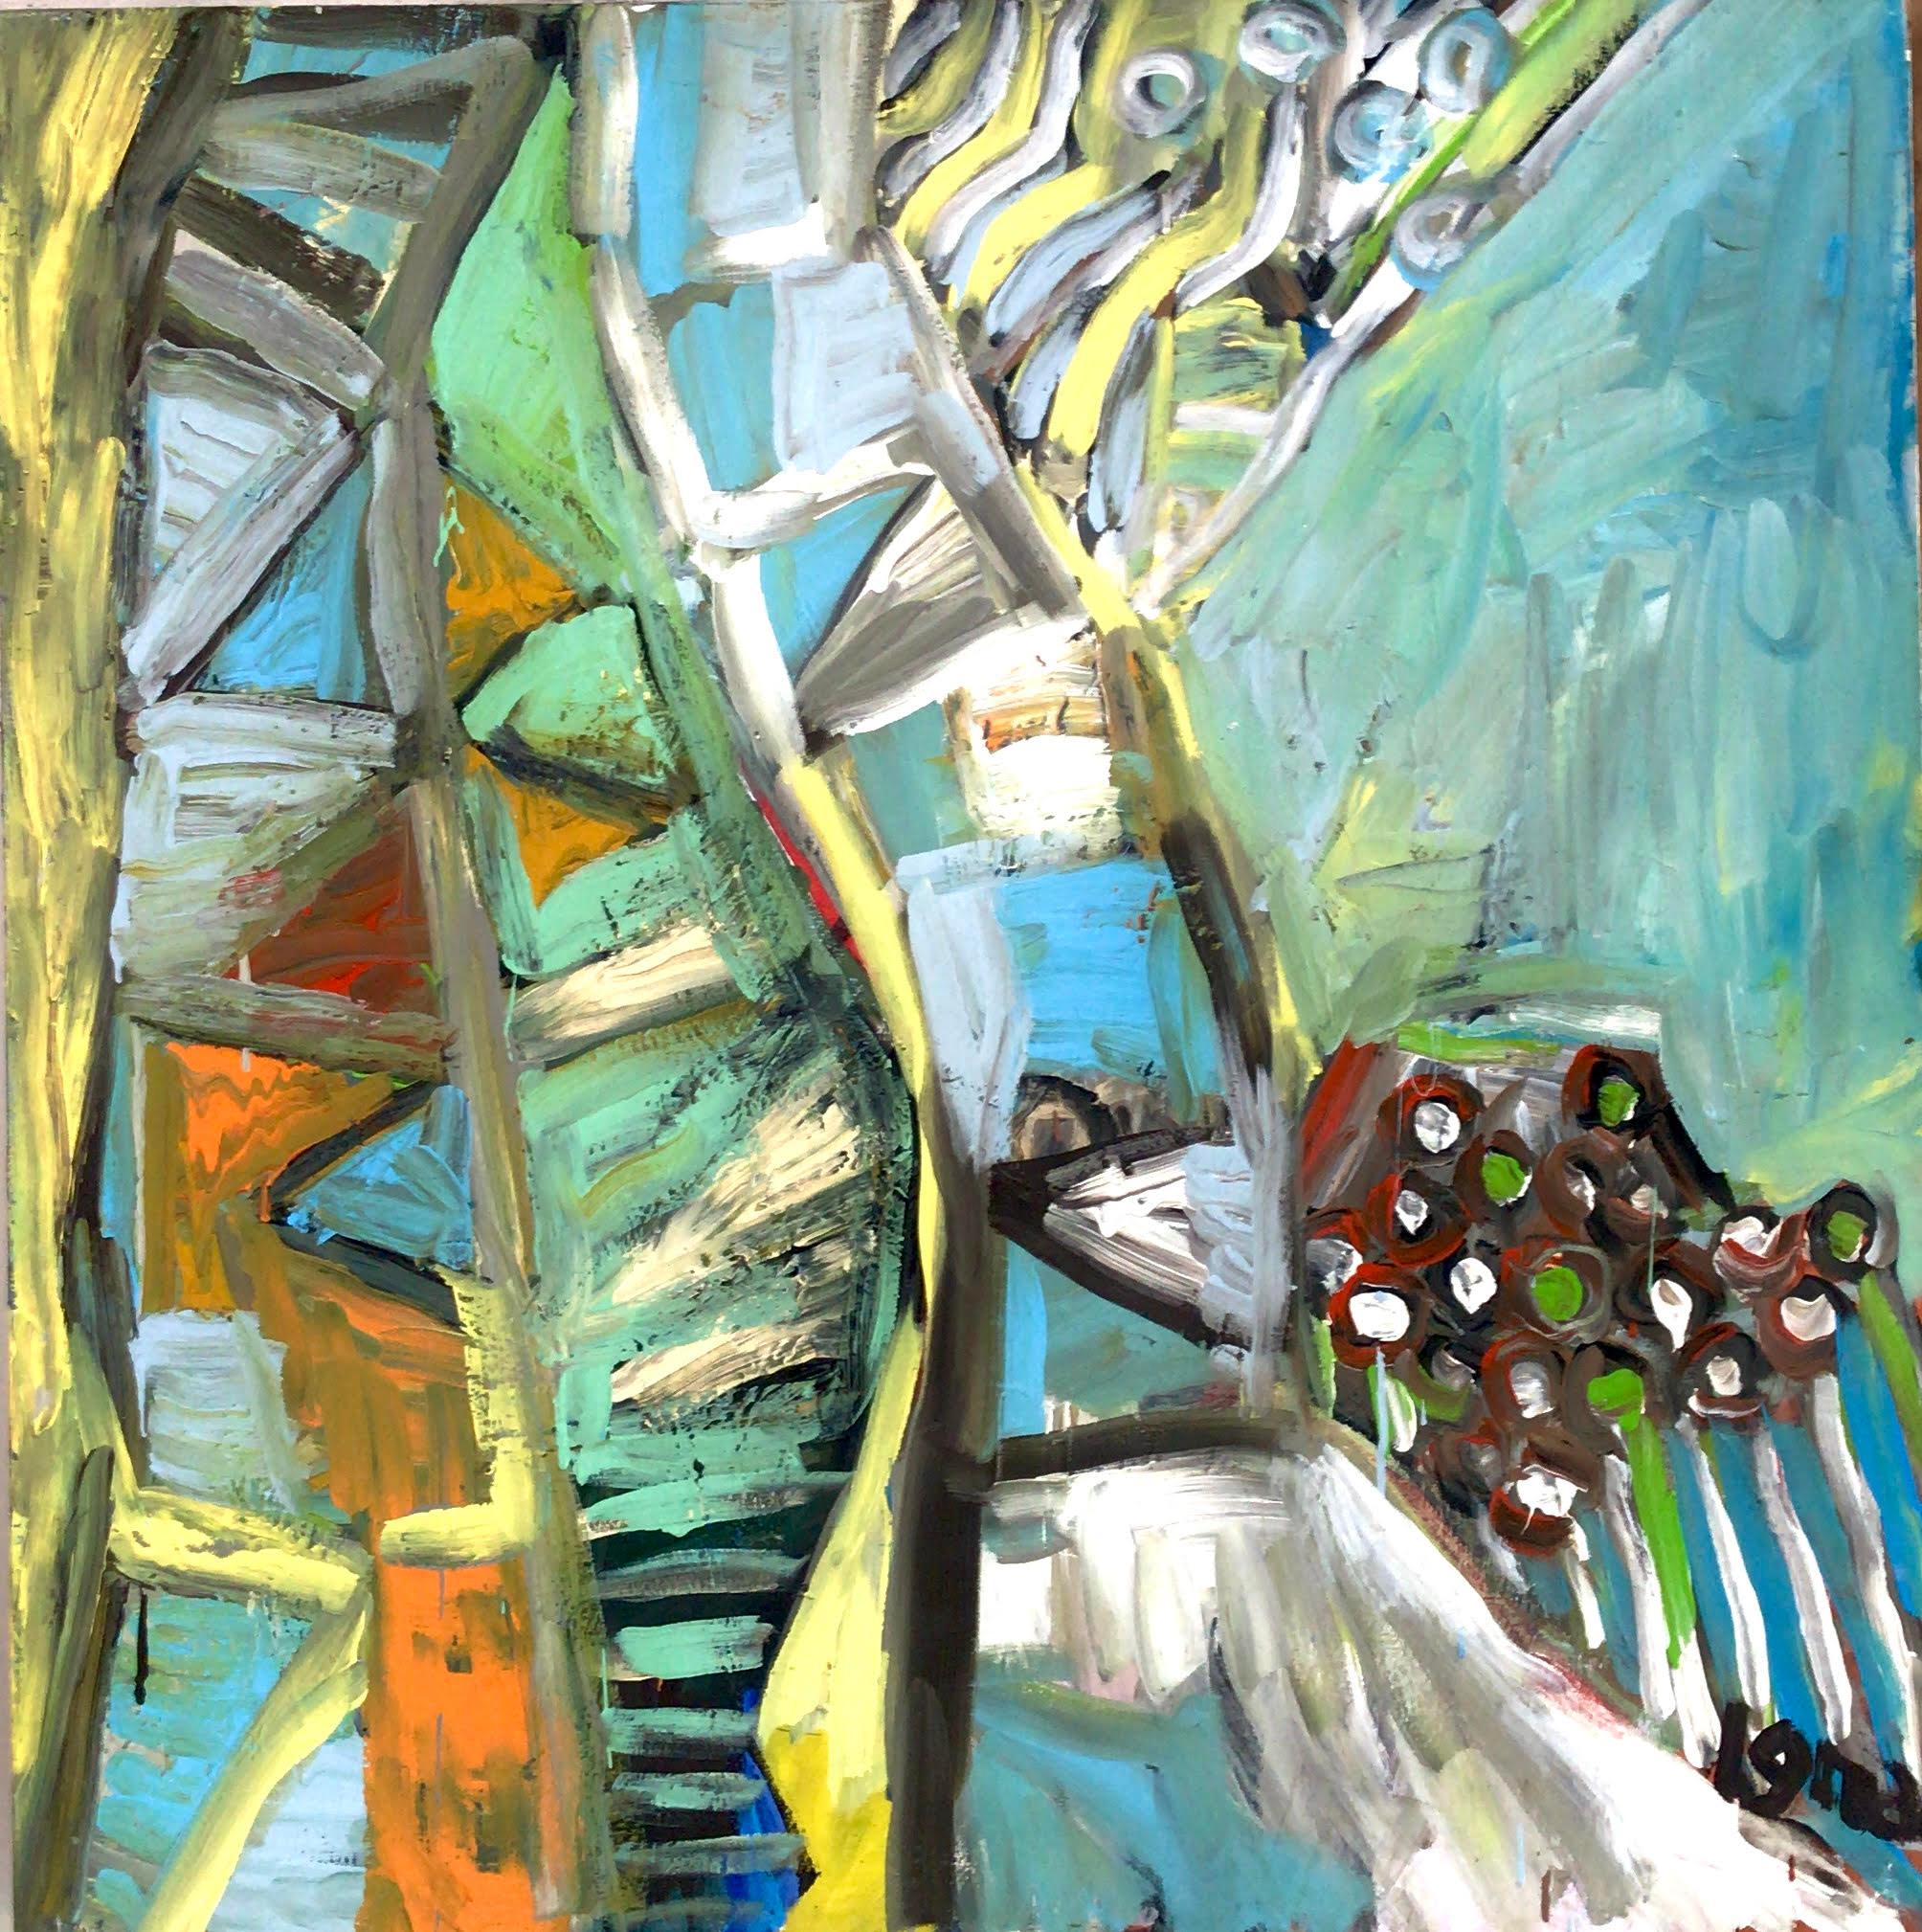 Abstract Painting José Ignacio Suarez Solis - Coqueiros de Klee, peinture abstraite. De la série Matas